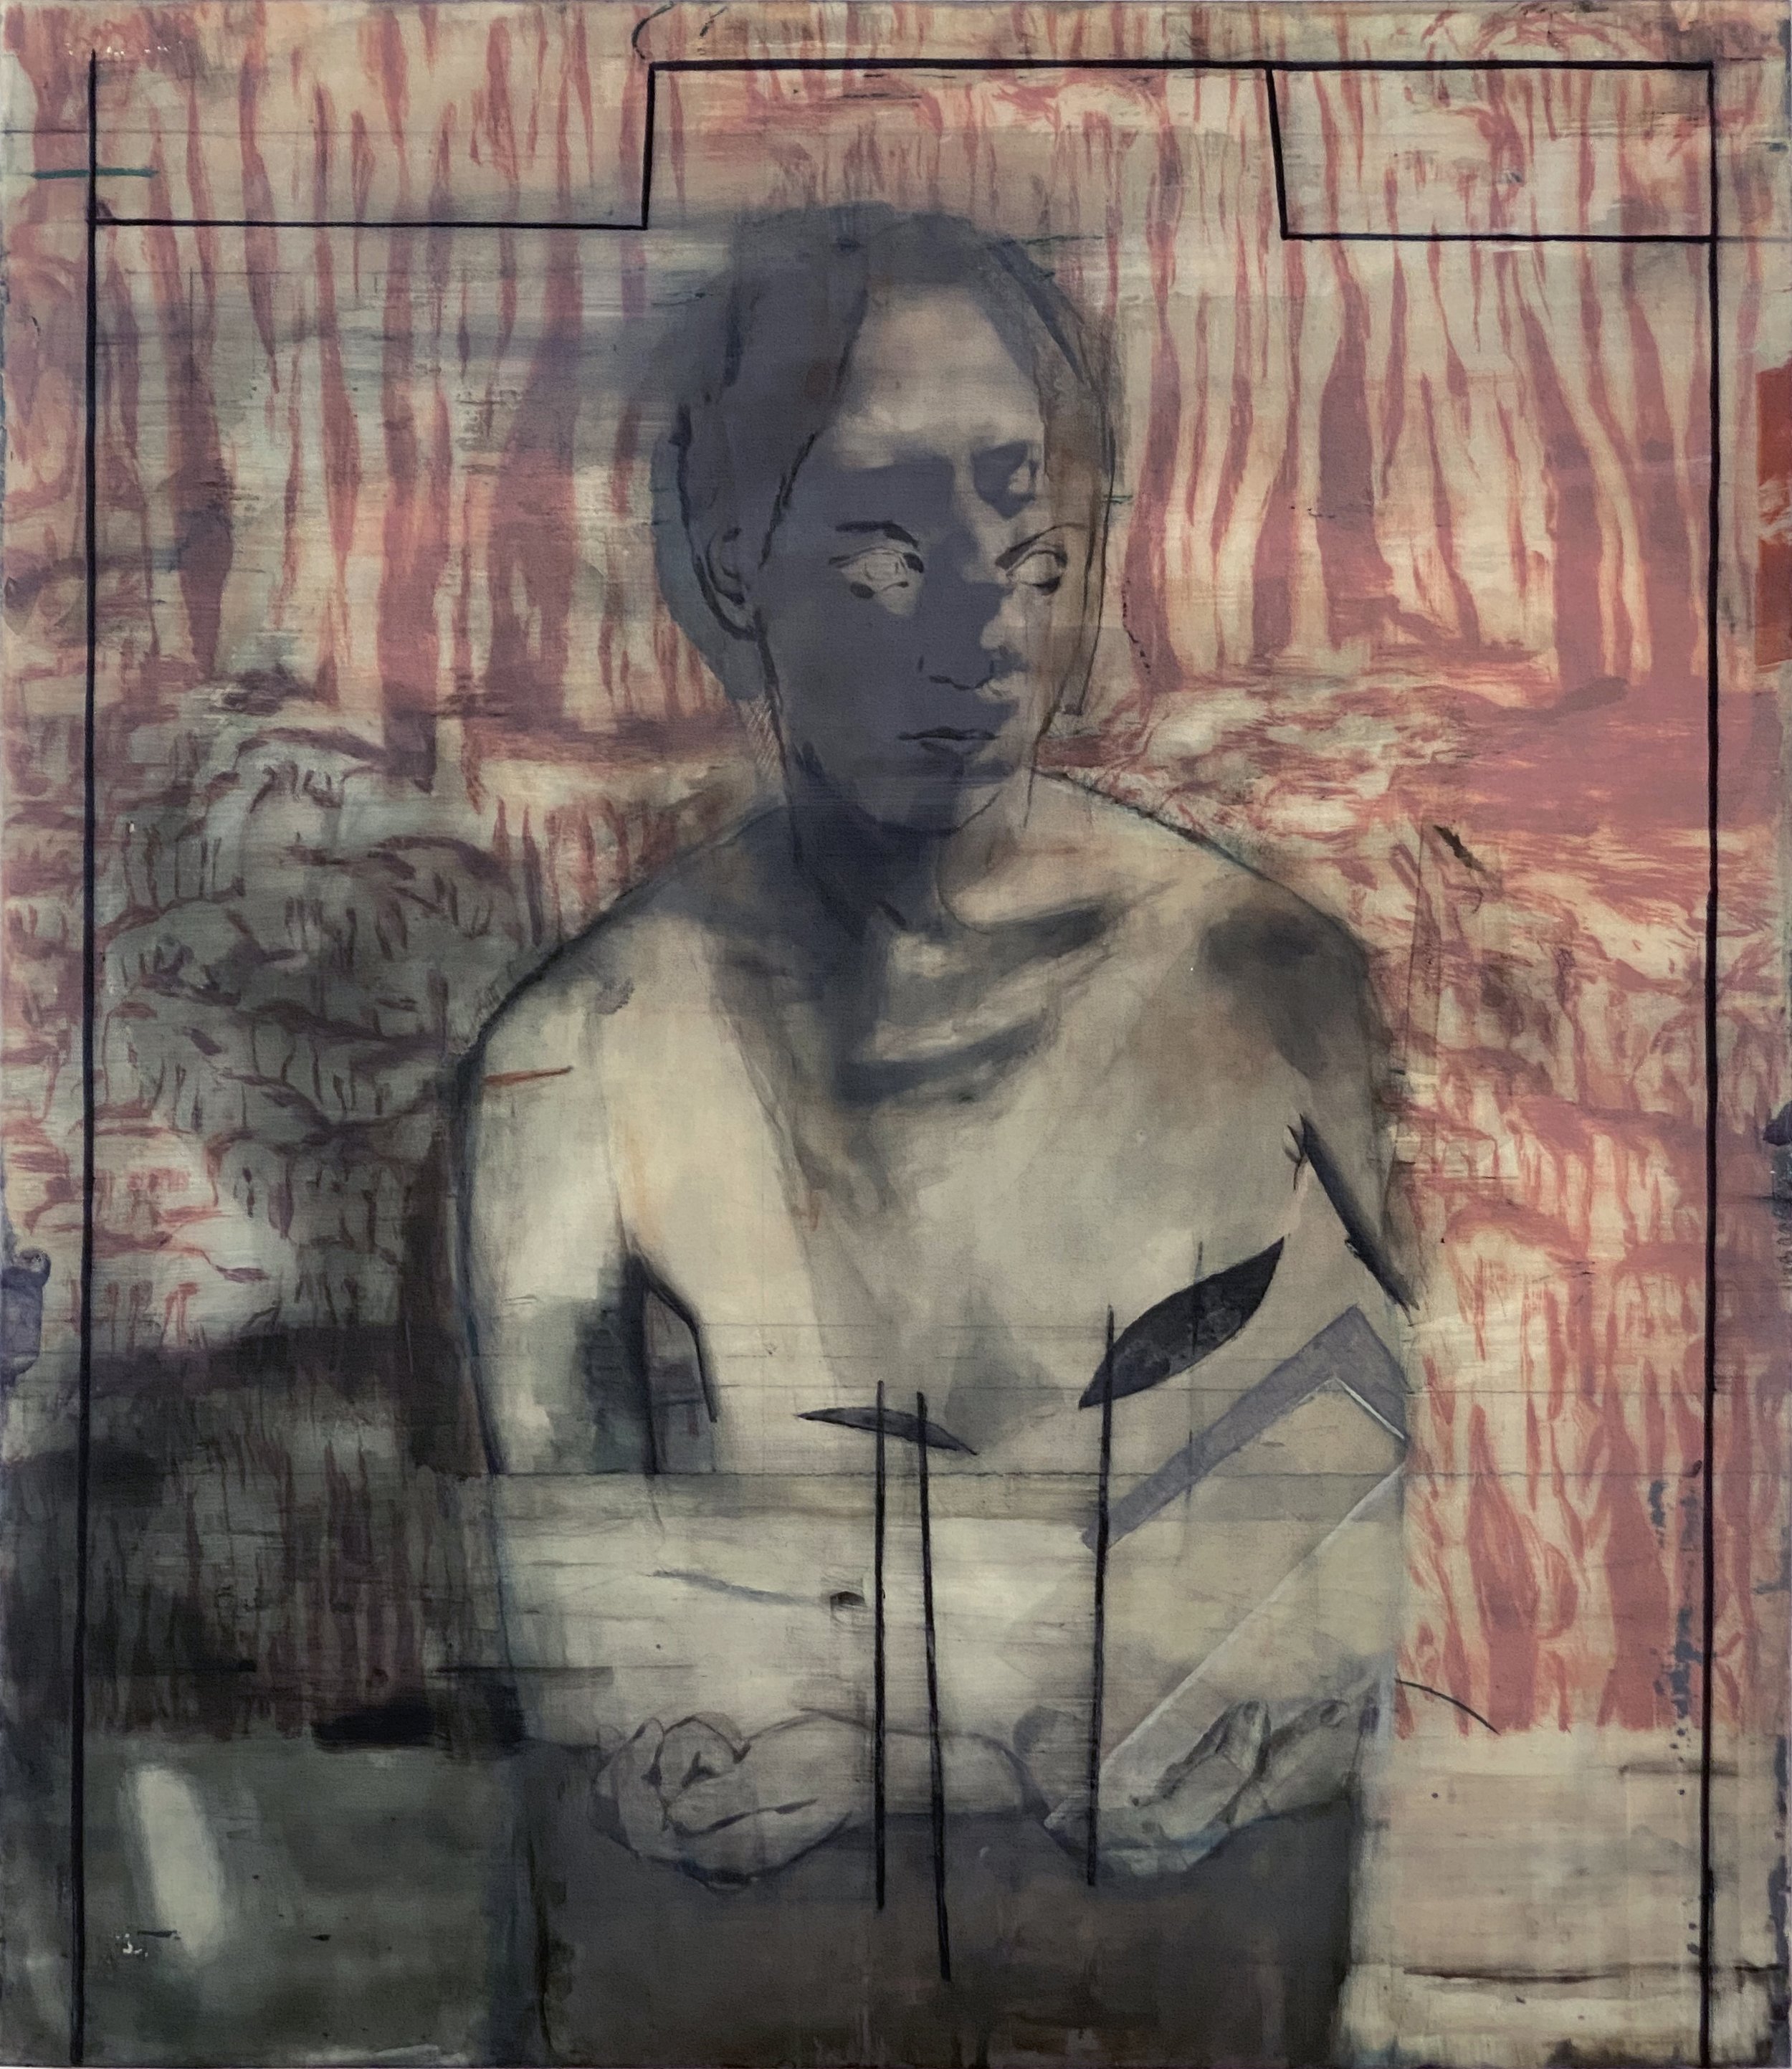   Mary Magdalene  2019, Mixed media on drafting film 70 x 61 cm 